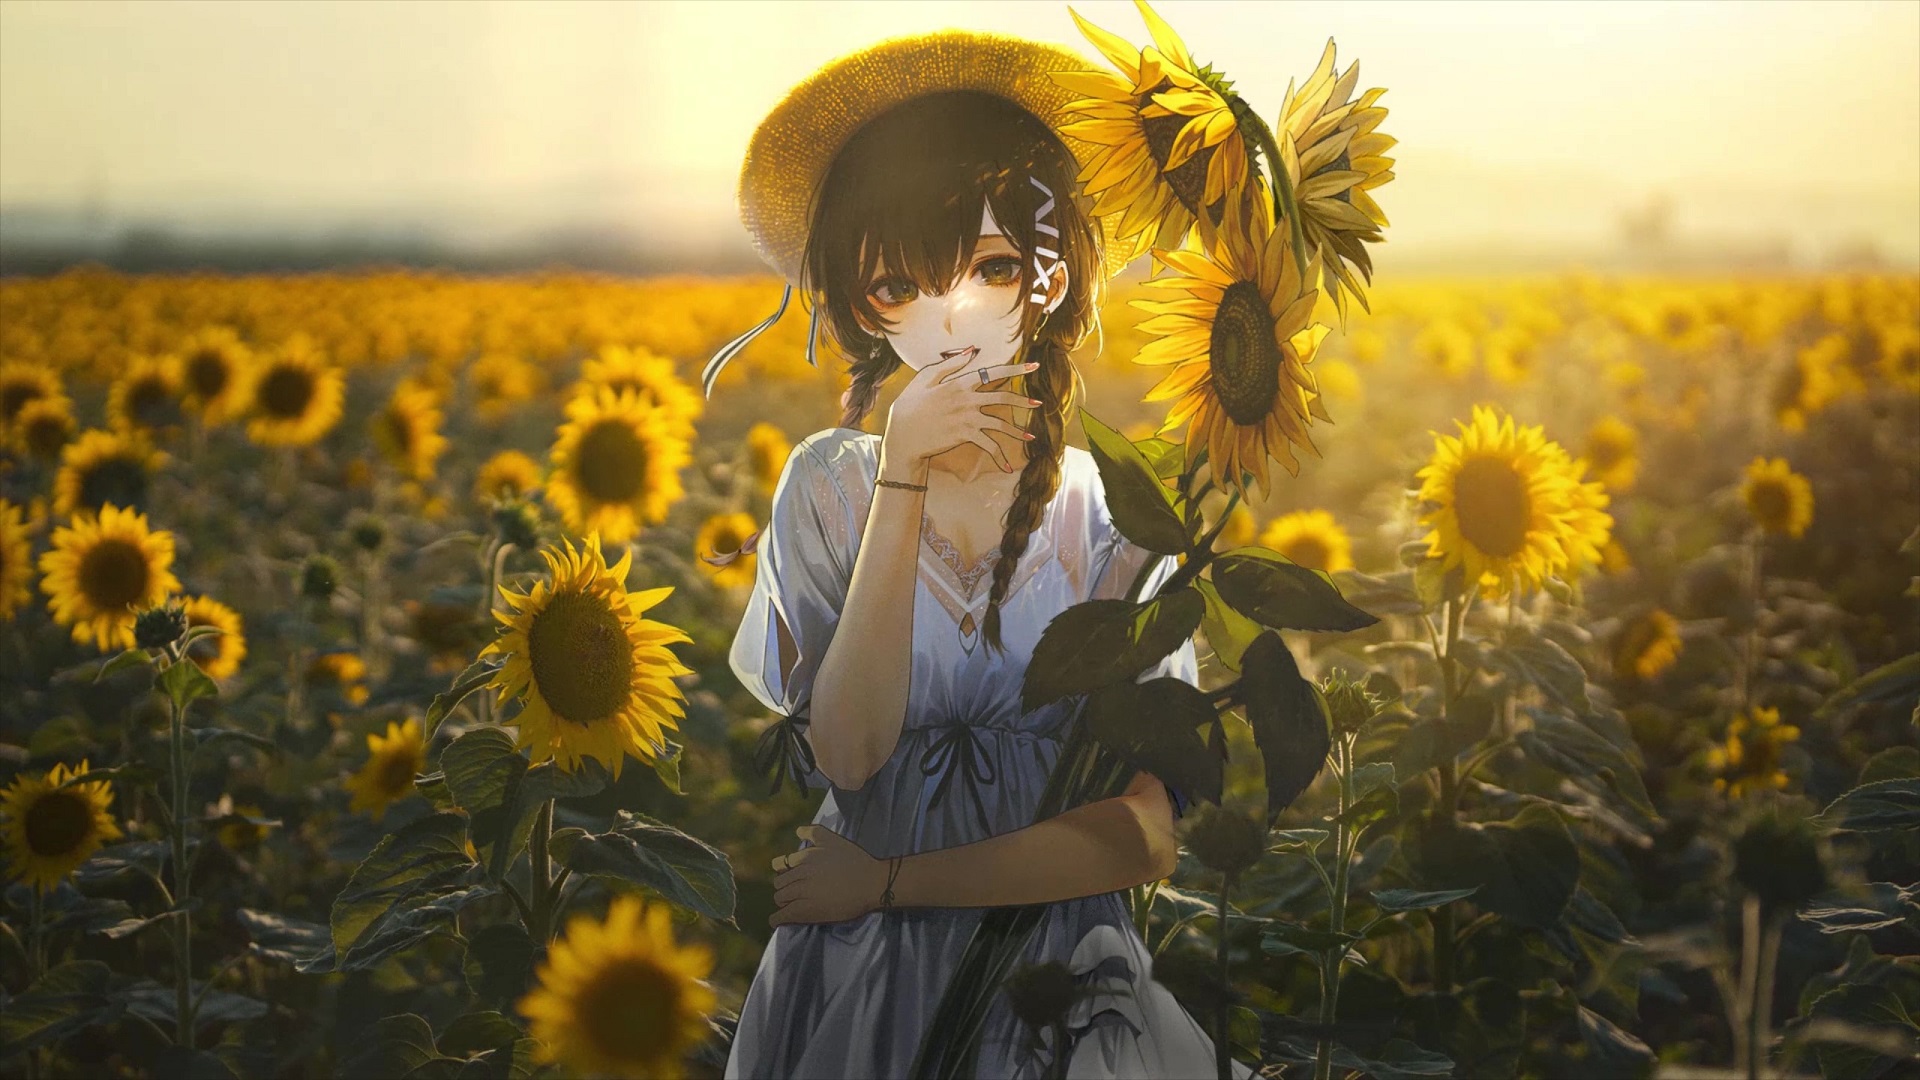 Anime School Girl Sunflower Scenery 4K wallpaper download